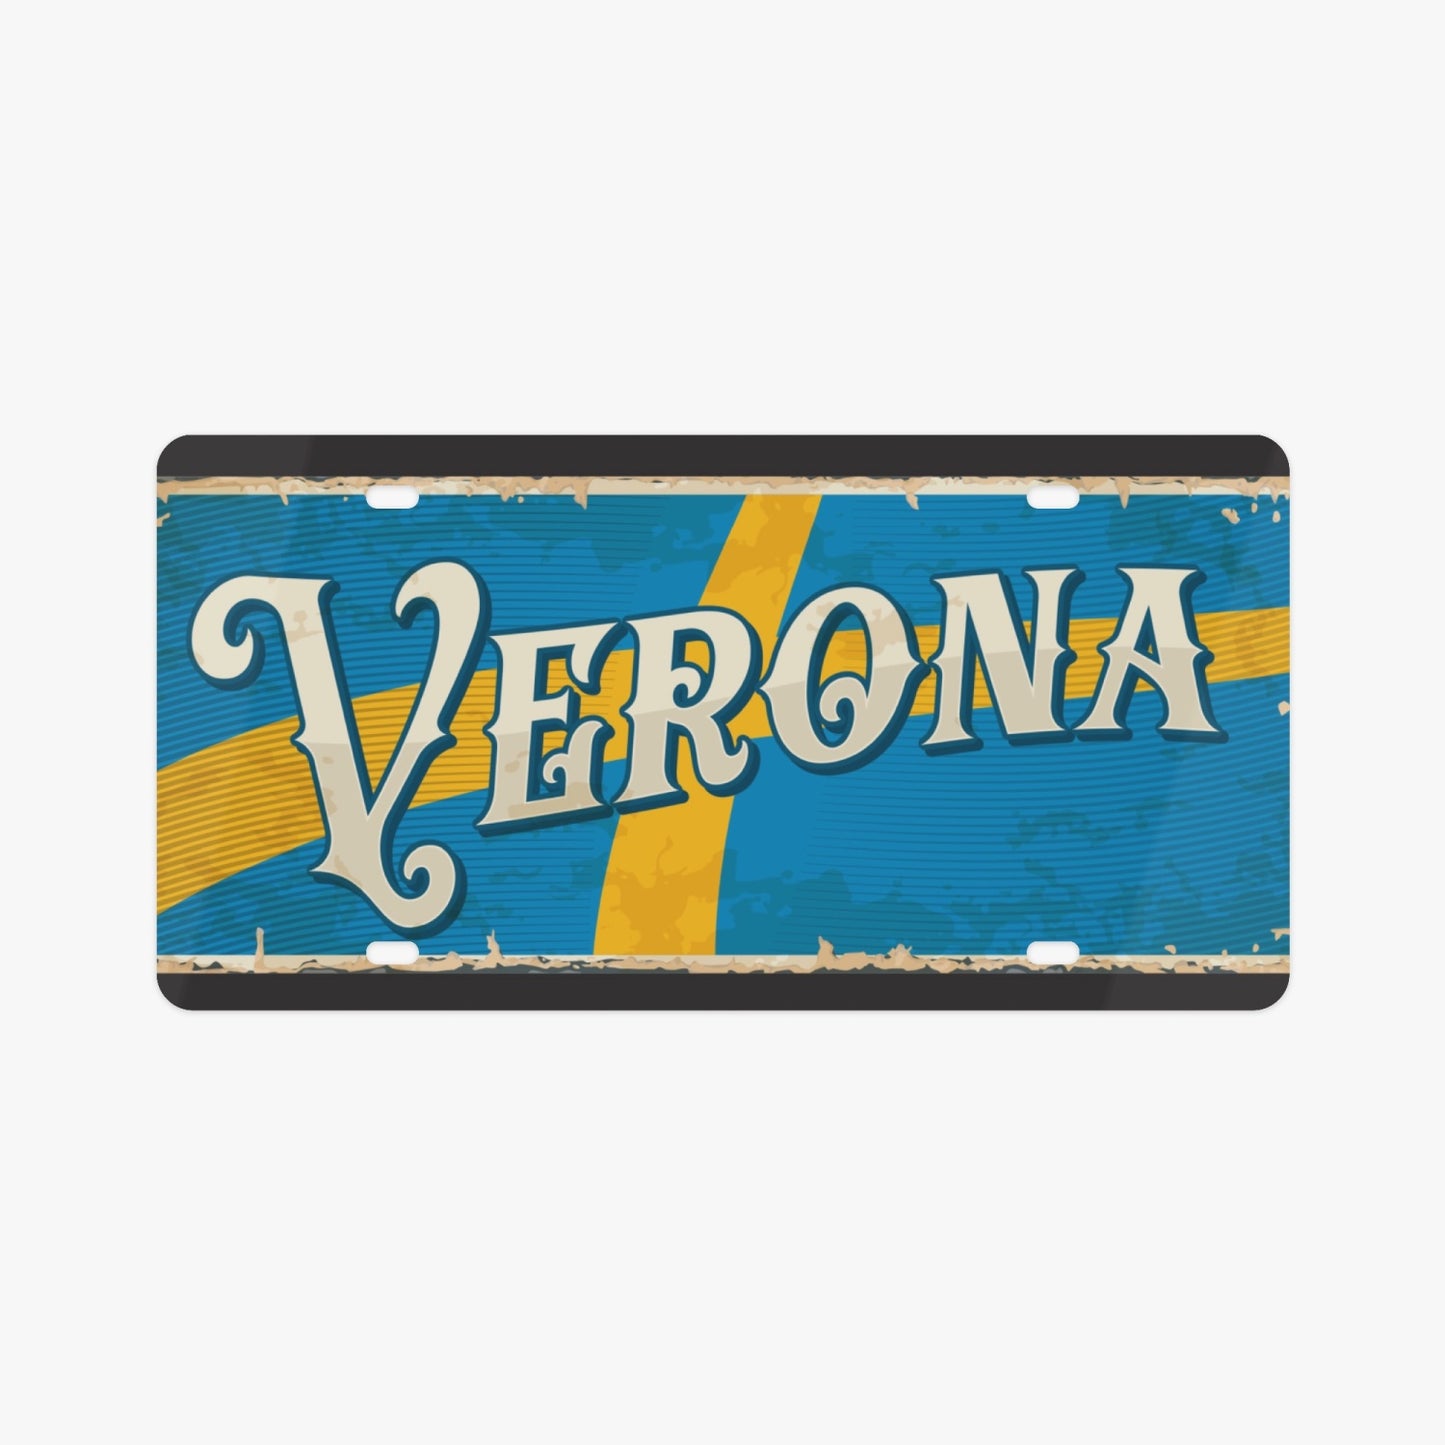 Verona License Plate Italian Style